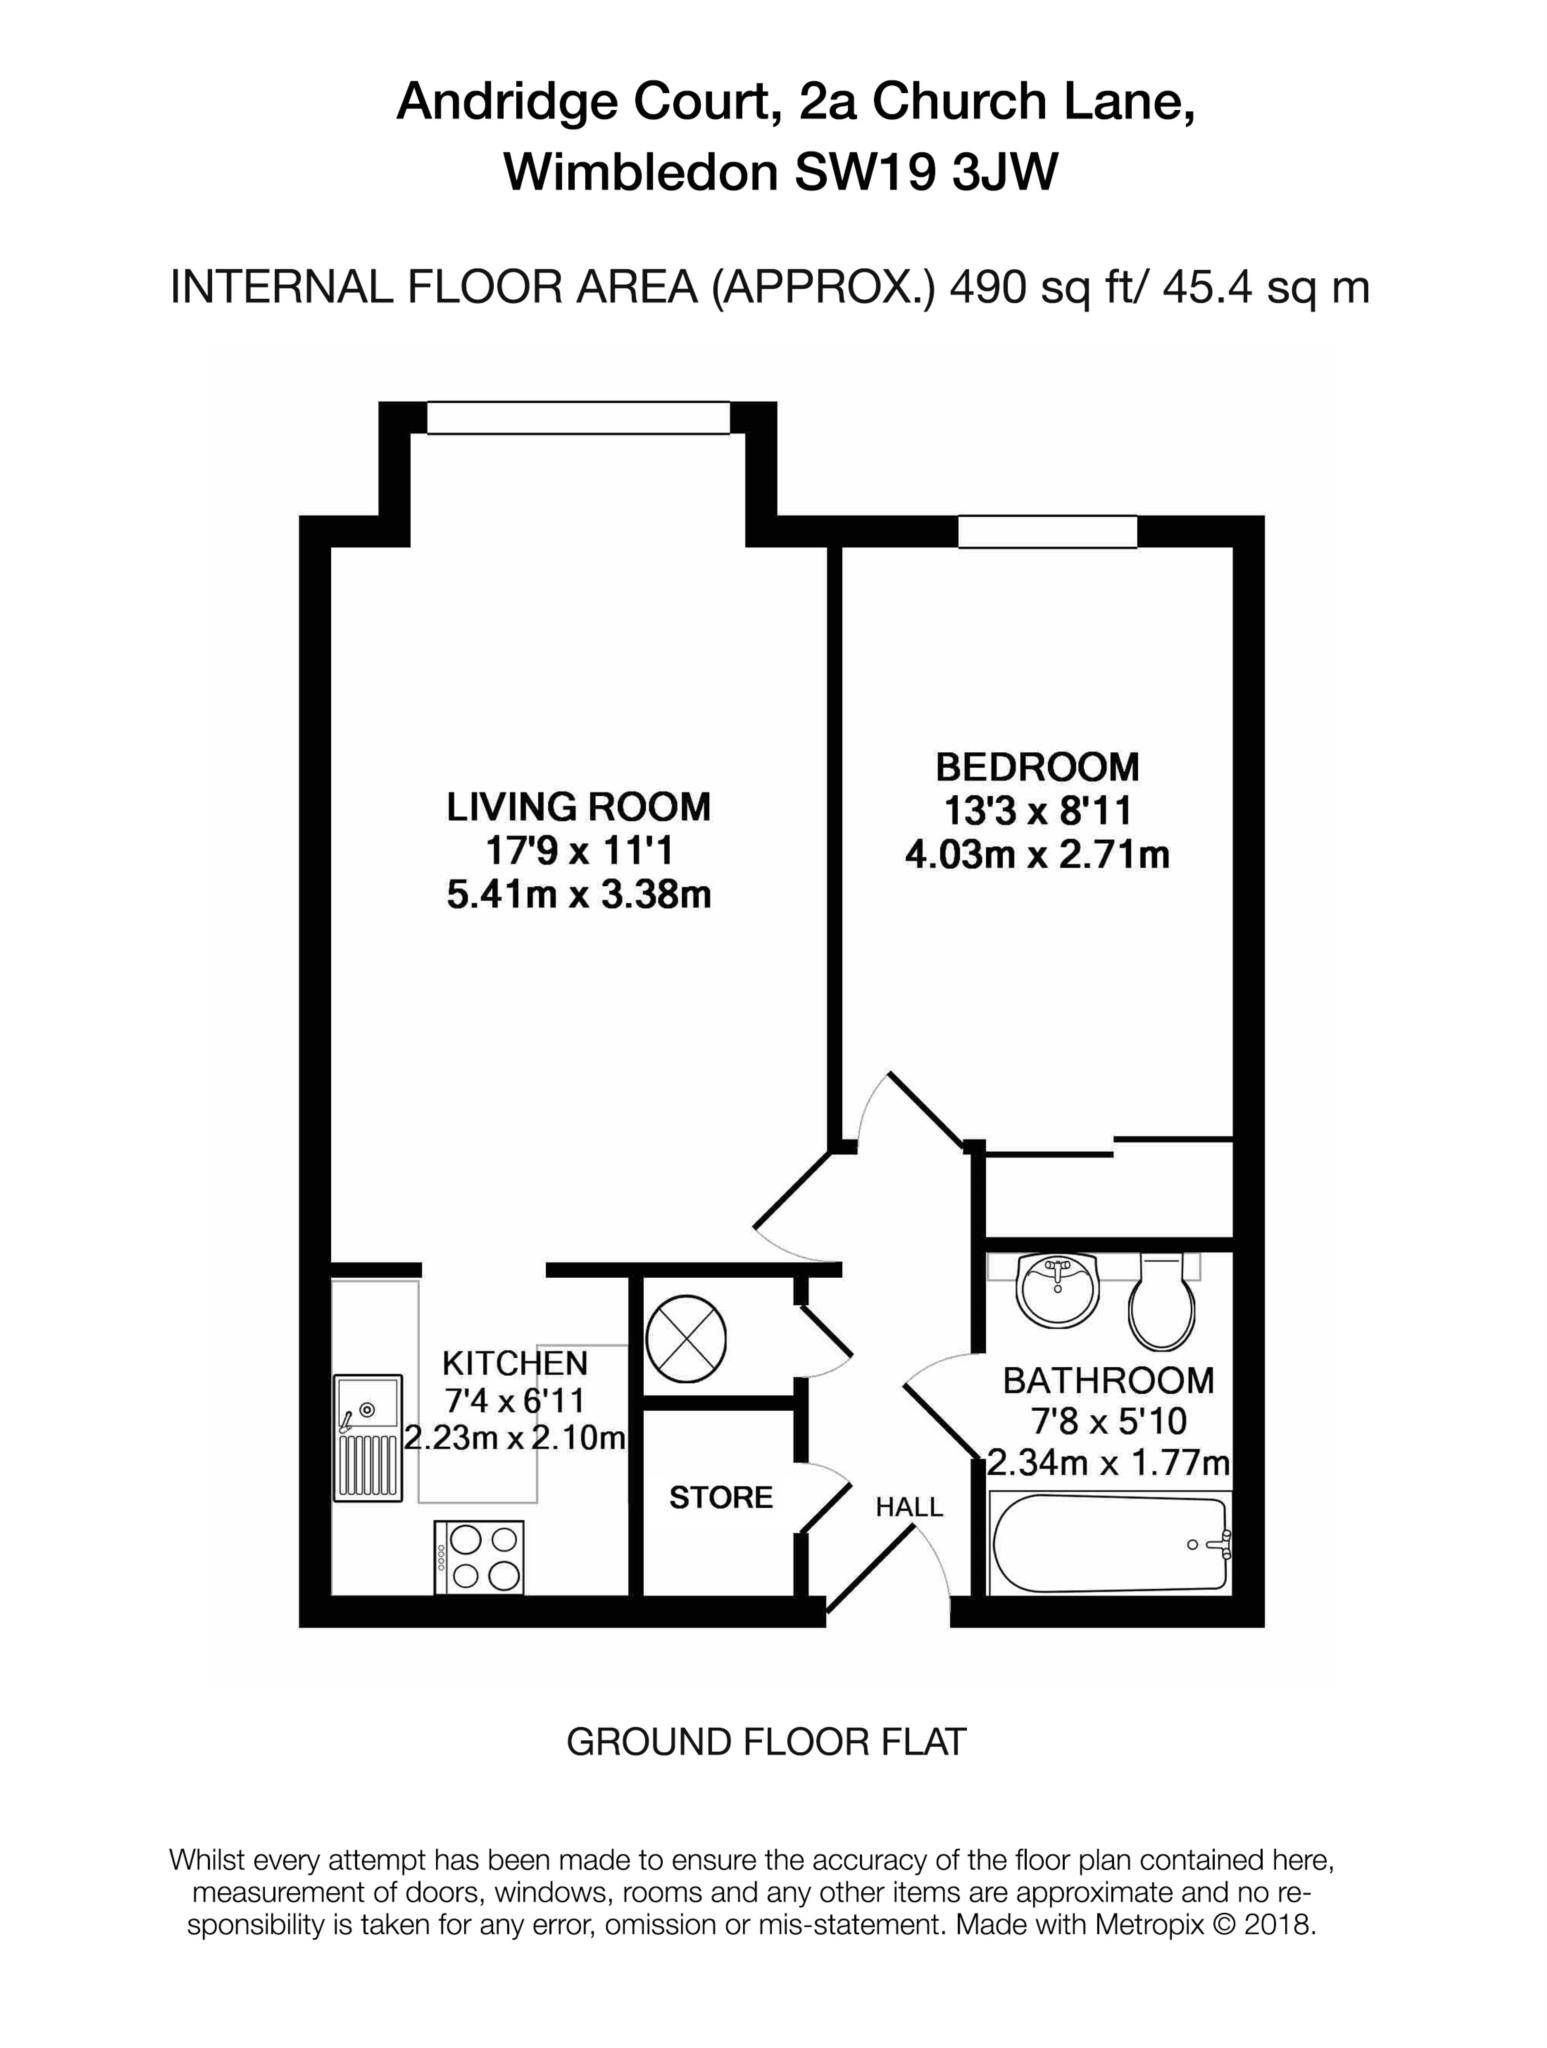 Floorplan - 1 Bedroom Apartment, Andridge Court – Wimbledon